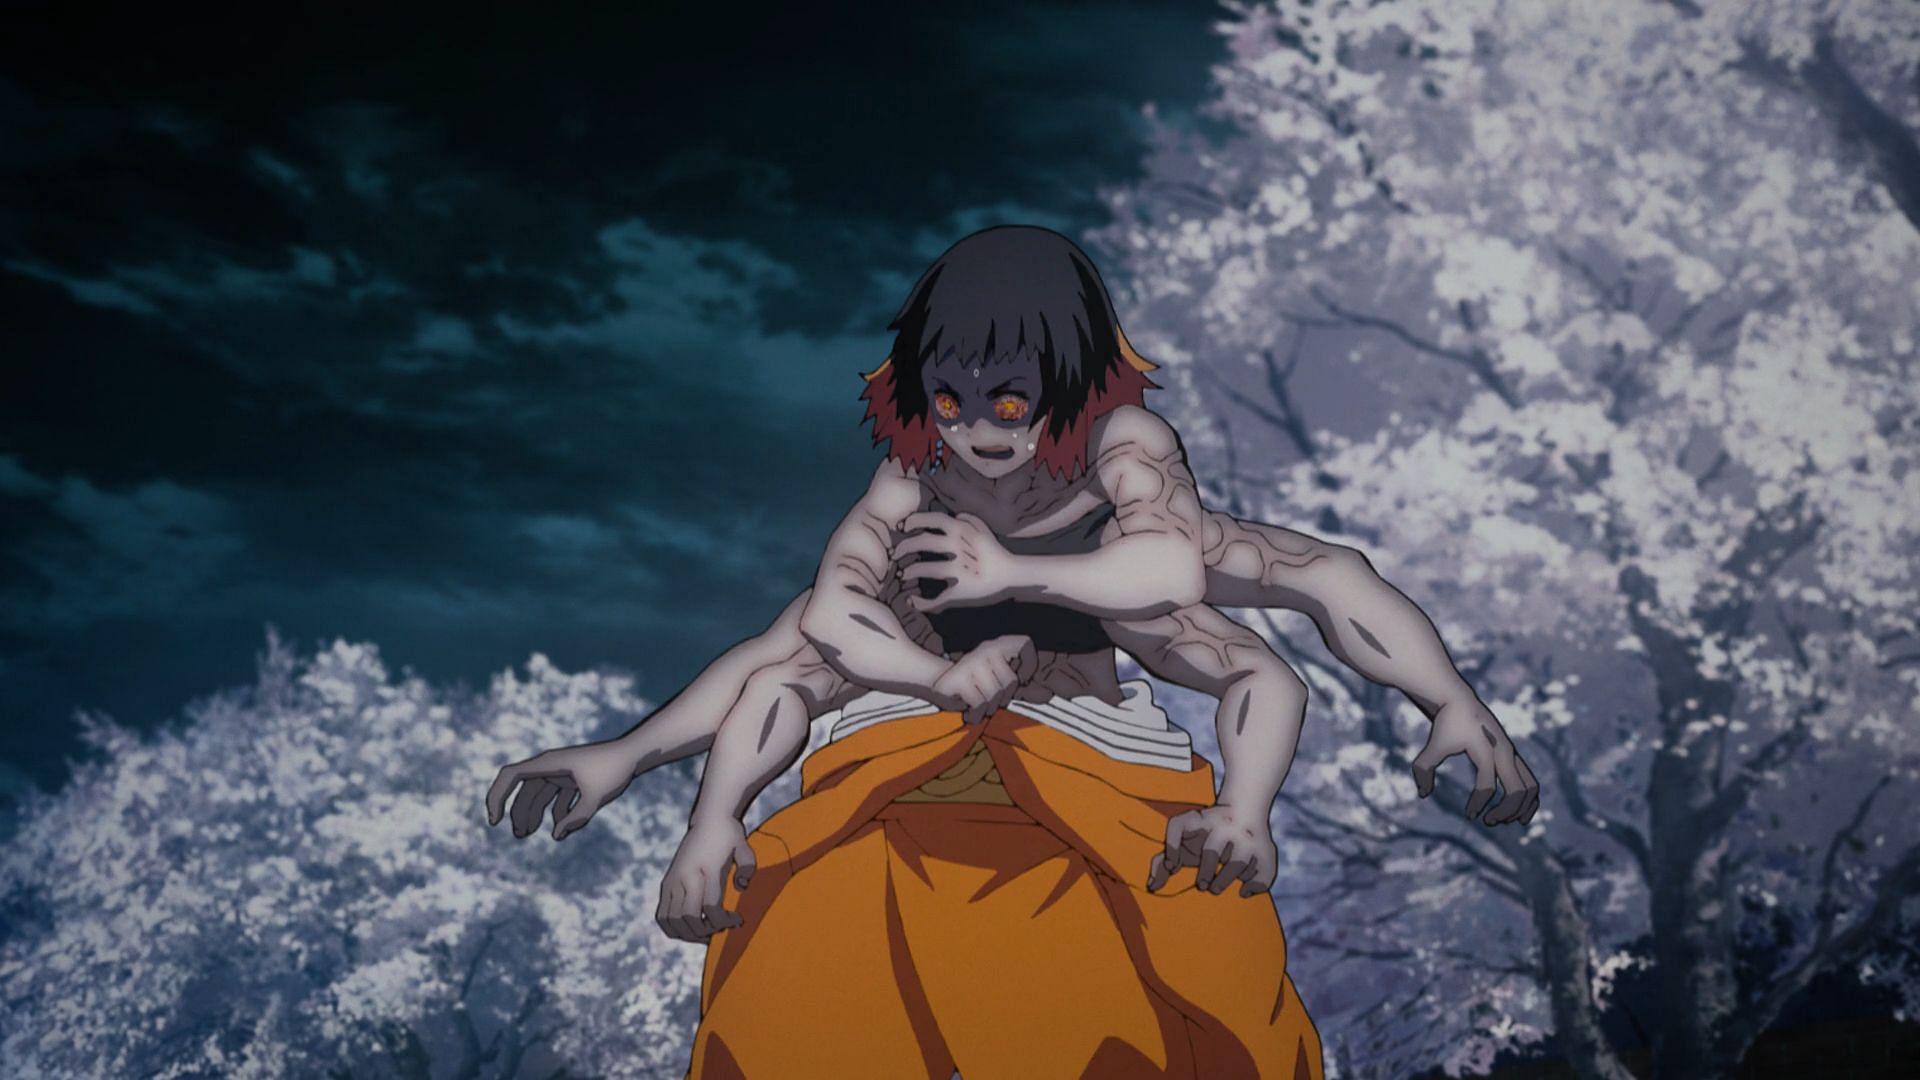 Susamaru moments before dying in Demon Slayer (Image via Ufotable)